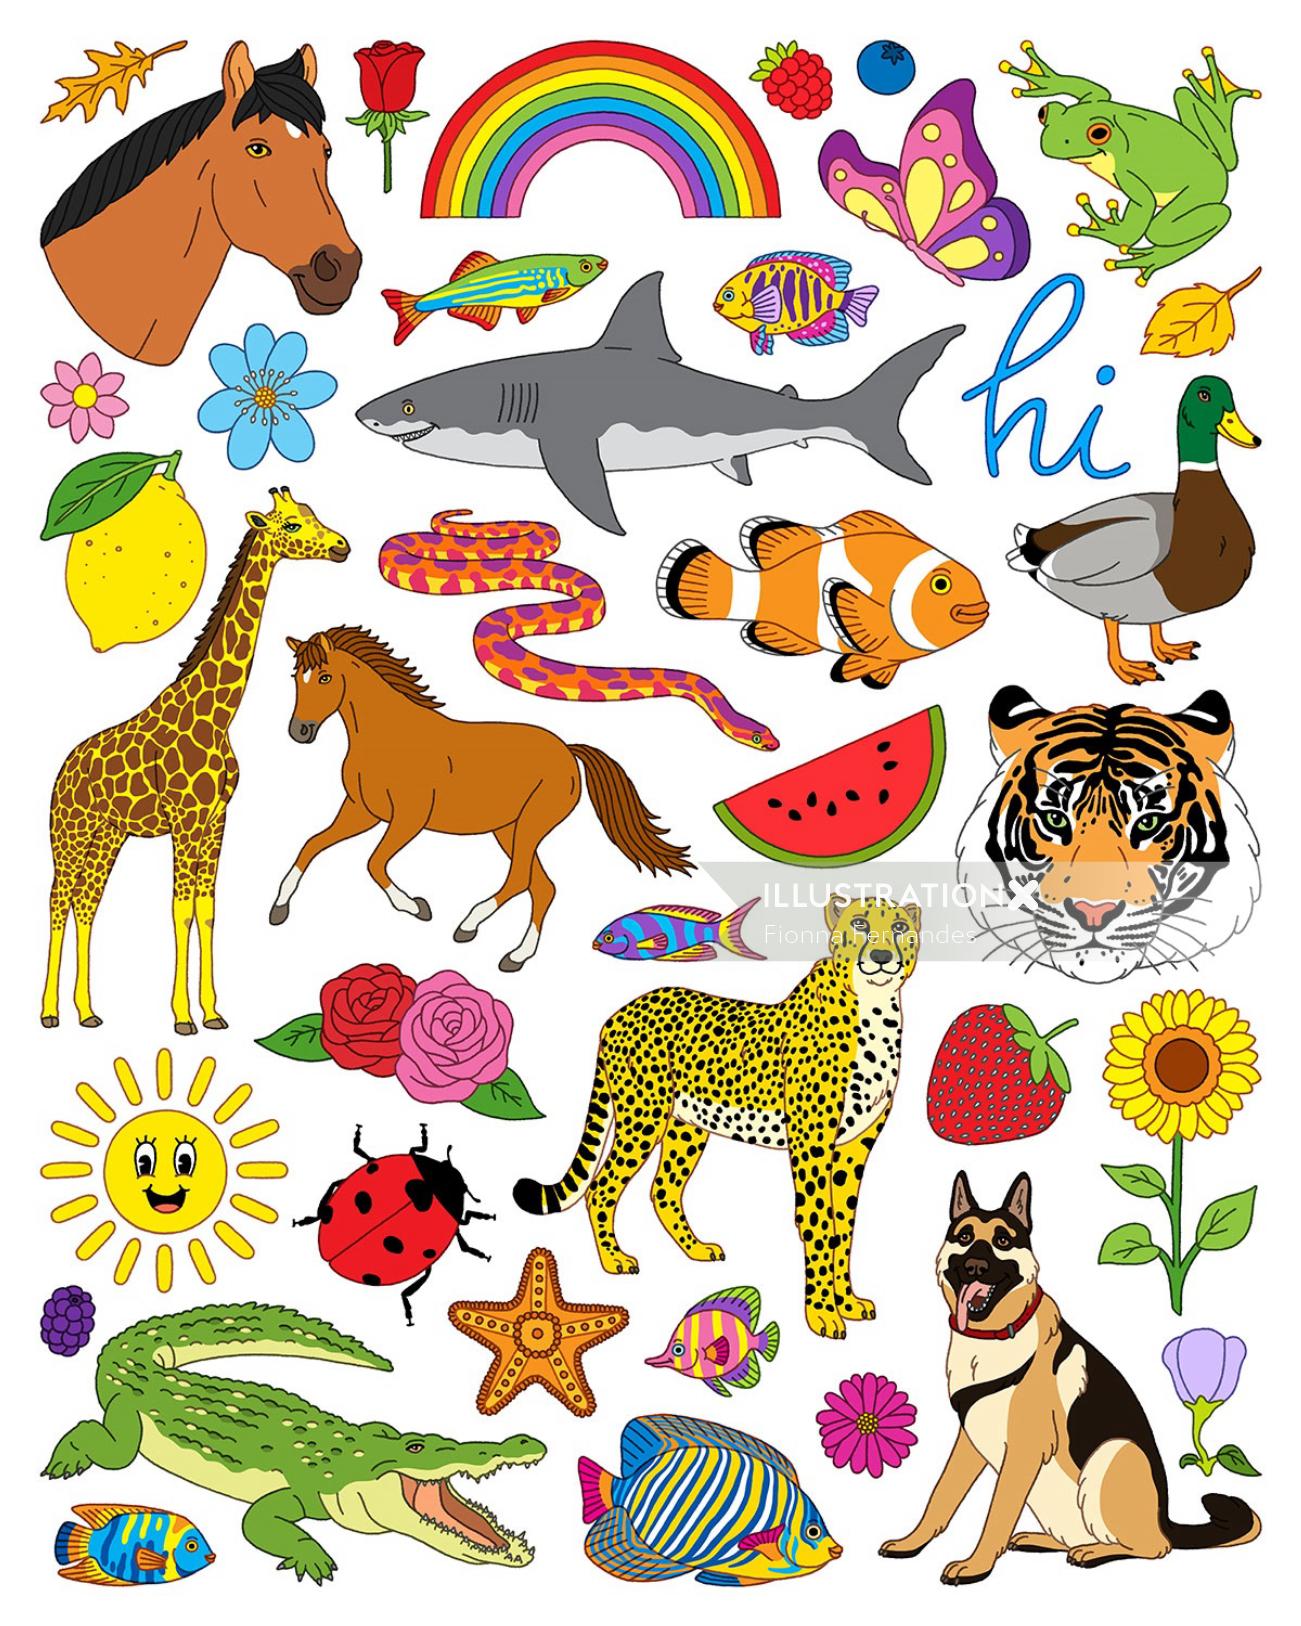 Animals & Nature | Illustration by Fionna Fernandes